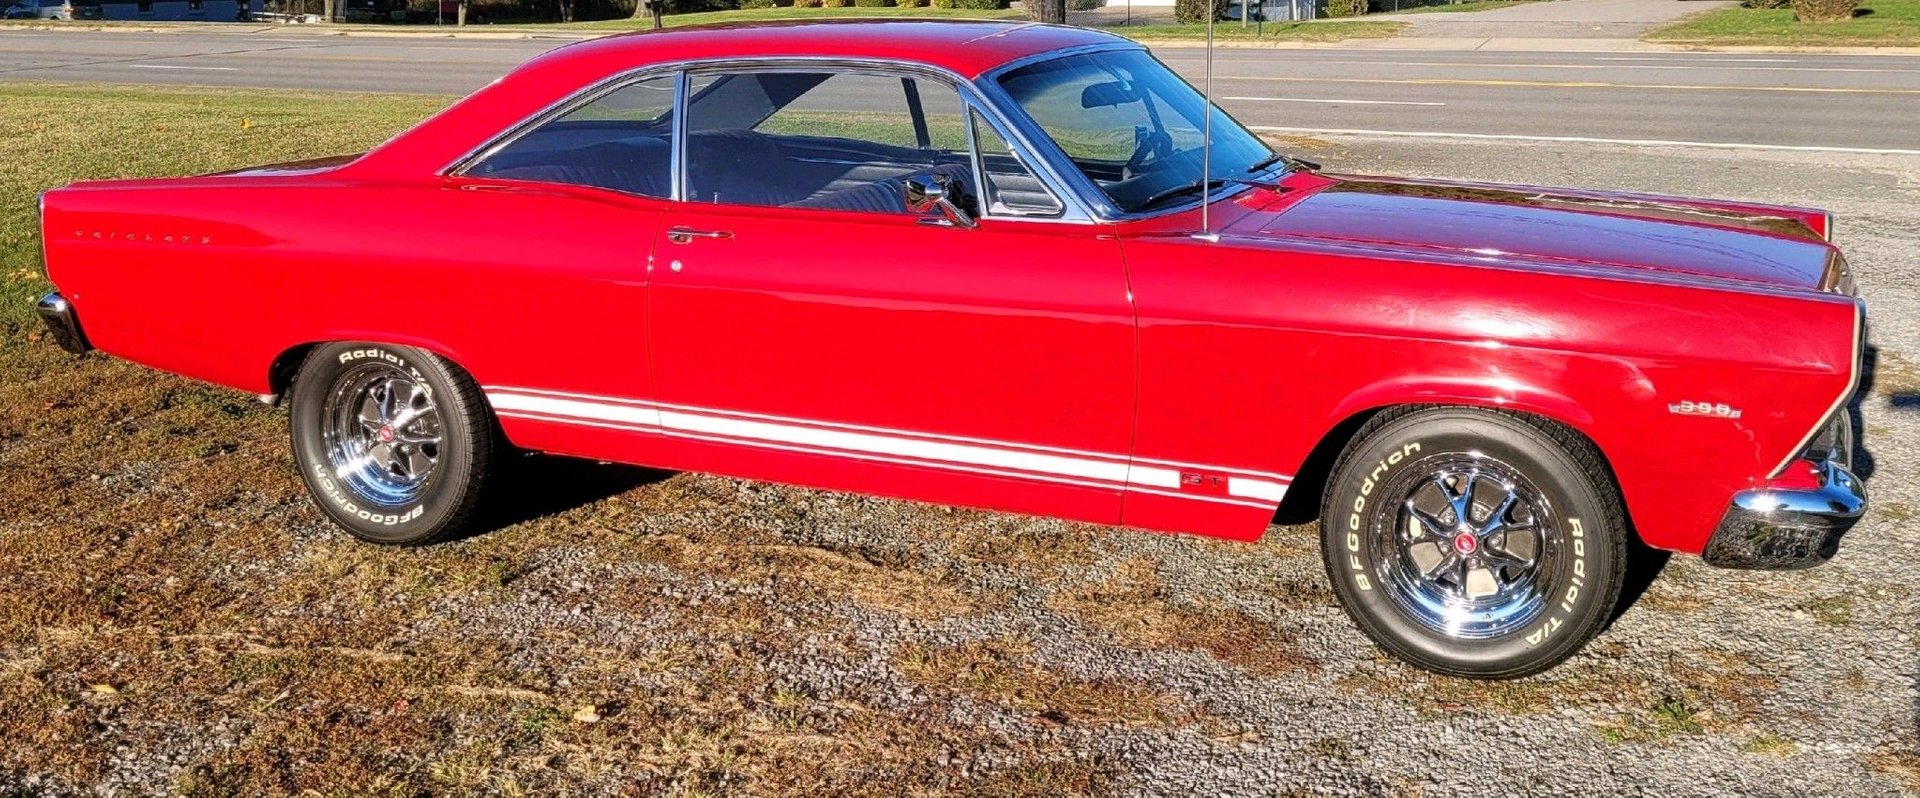 1967 ford fairlane 500